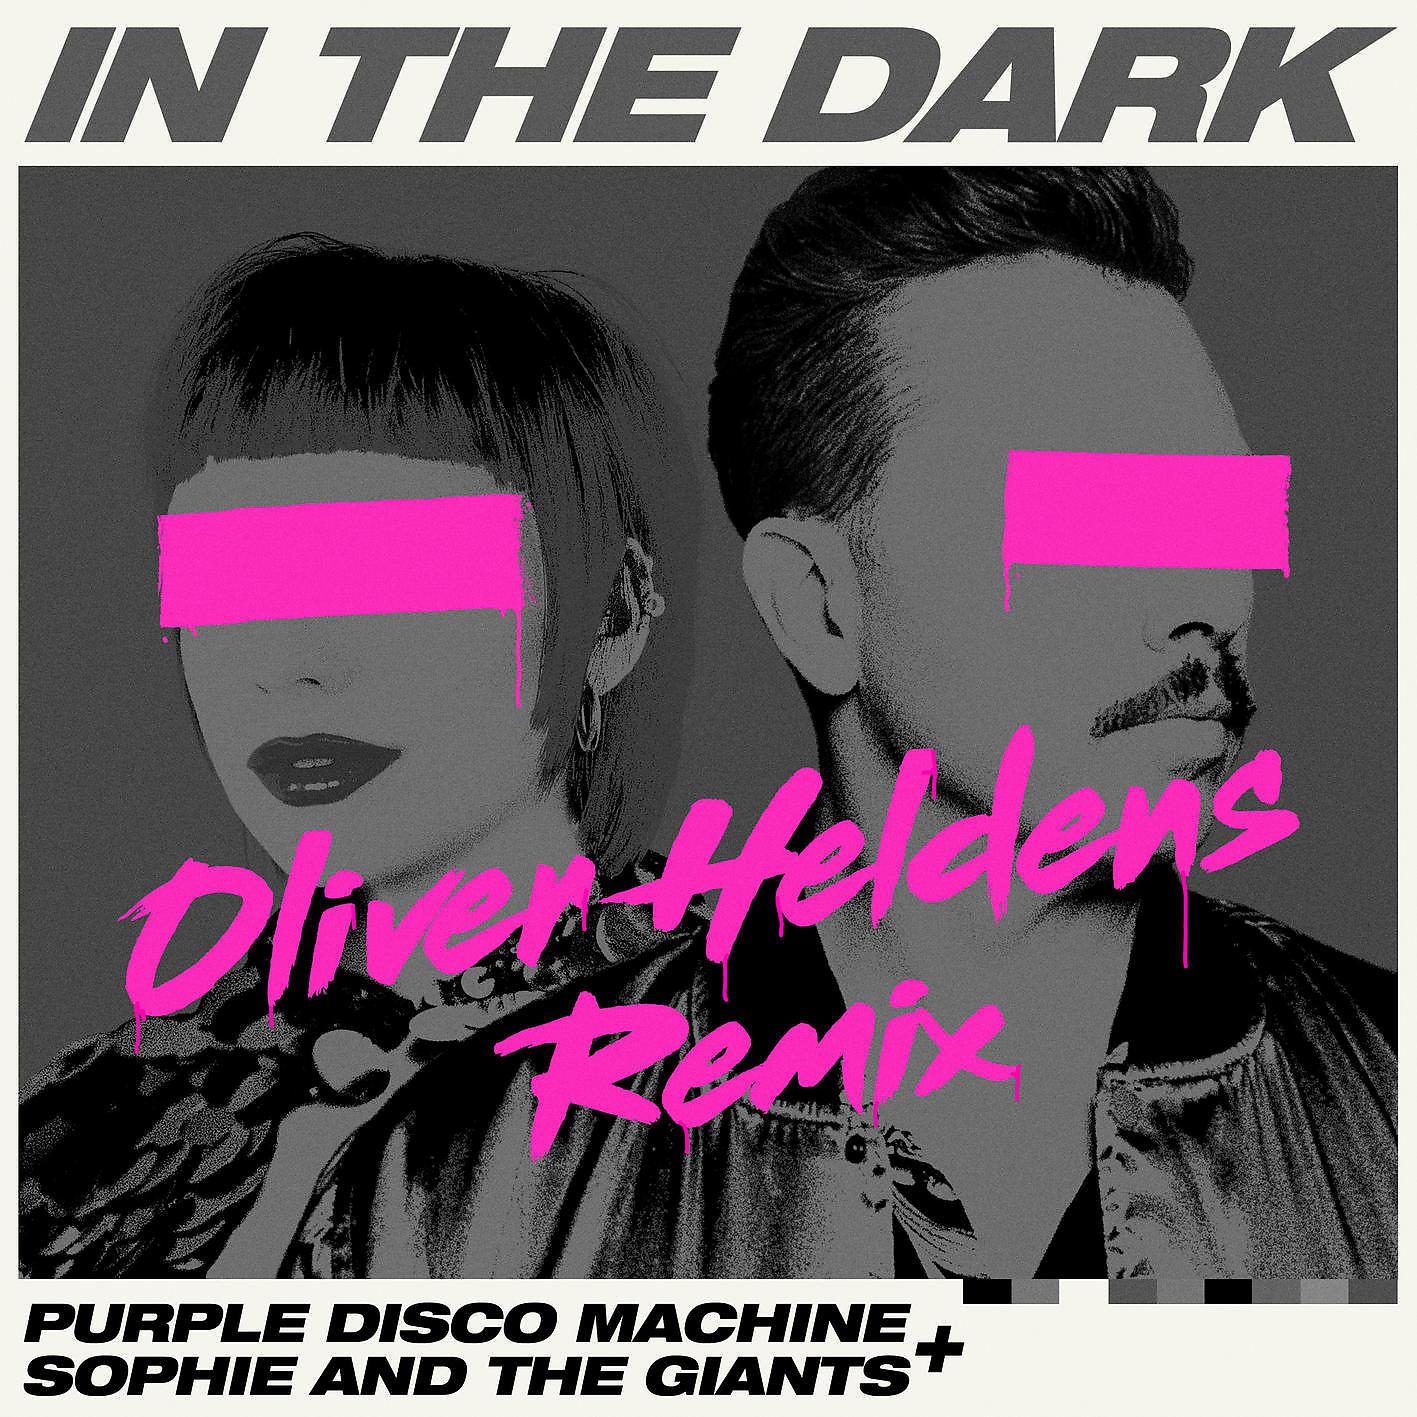 Purple disco machine asdis amice. Purple Disco Machine , Sophie and the giants - in the Dark (2022). Purple Disco Machine, Sophie and the giants. Софи Purple Disco Machine. Purple Disco Machine Sophie in the Dark.